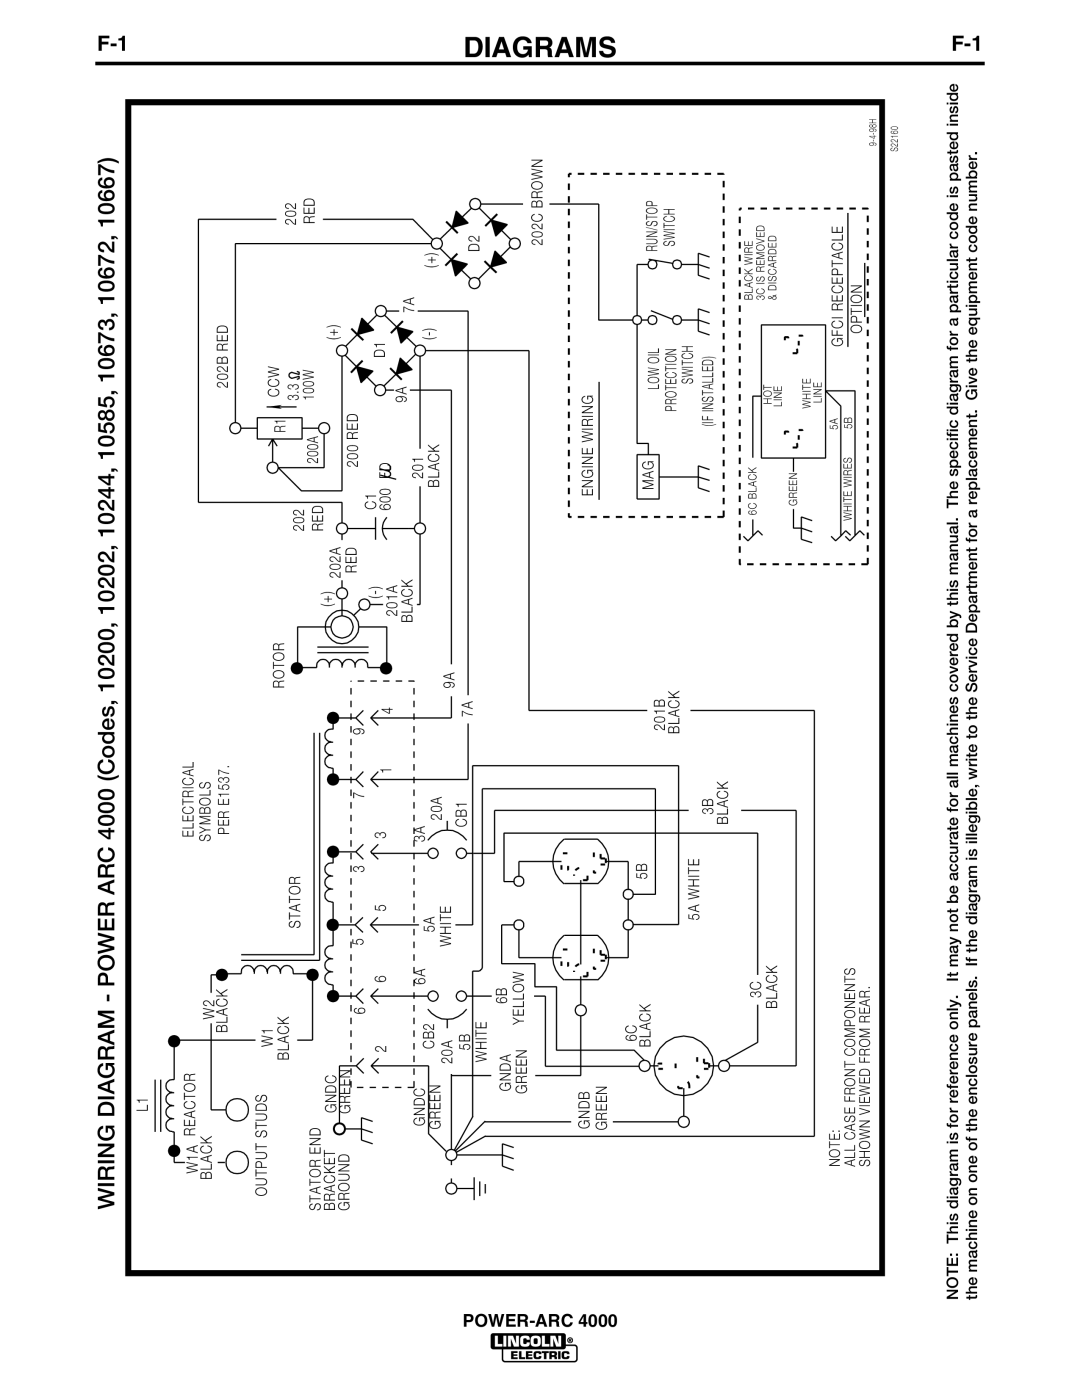 Lincoln POWER-ARC 4000 manual Diagrams, Power-Arc, ELECTRICAL SYMBOLS PER E1537, 200A, 100W 